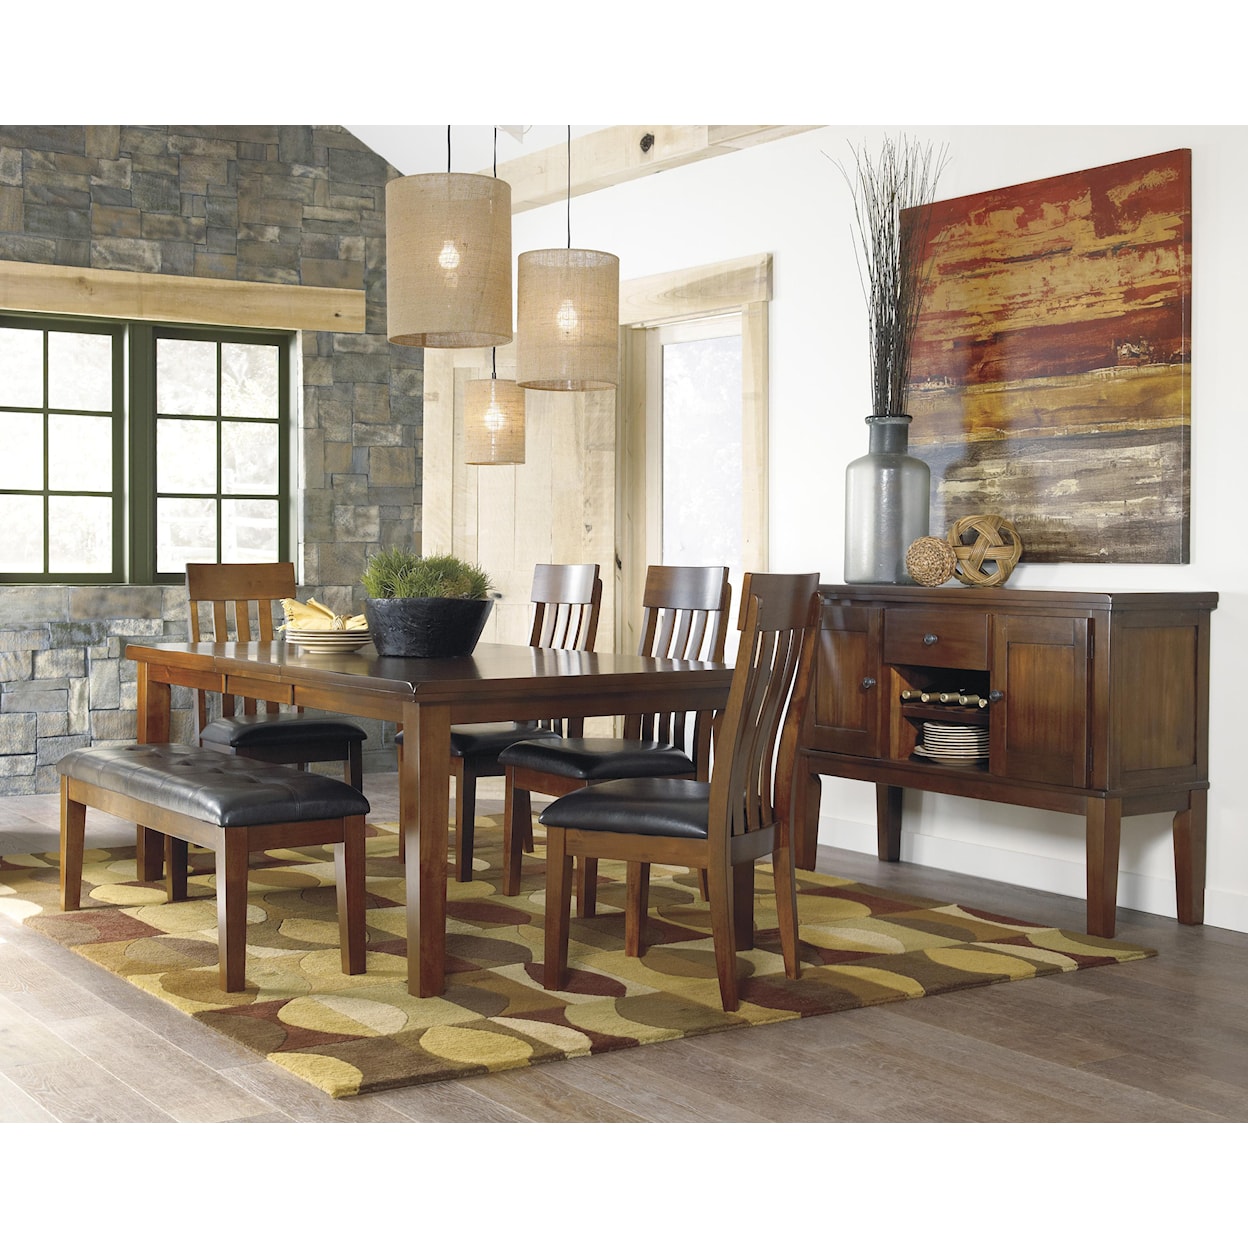 Ashley Furniture Signature Design Ralene 6-Pc Dining Set with Bench